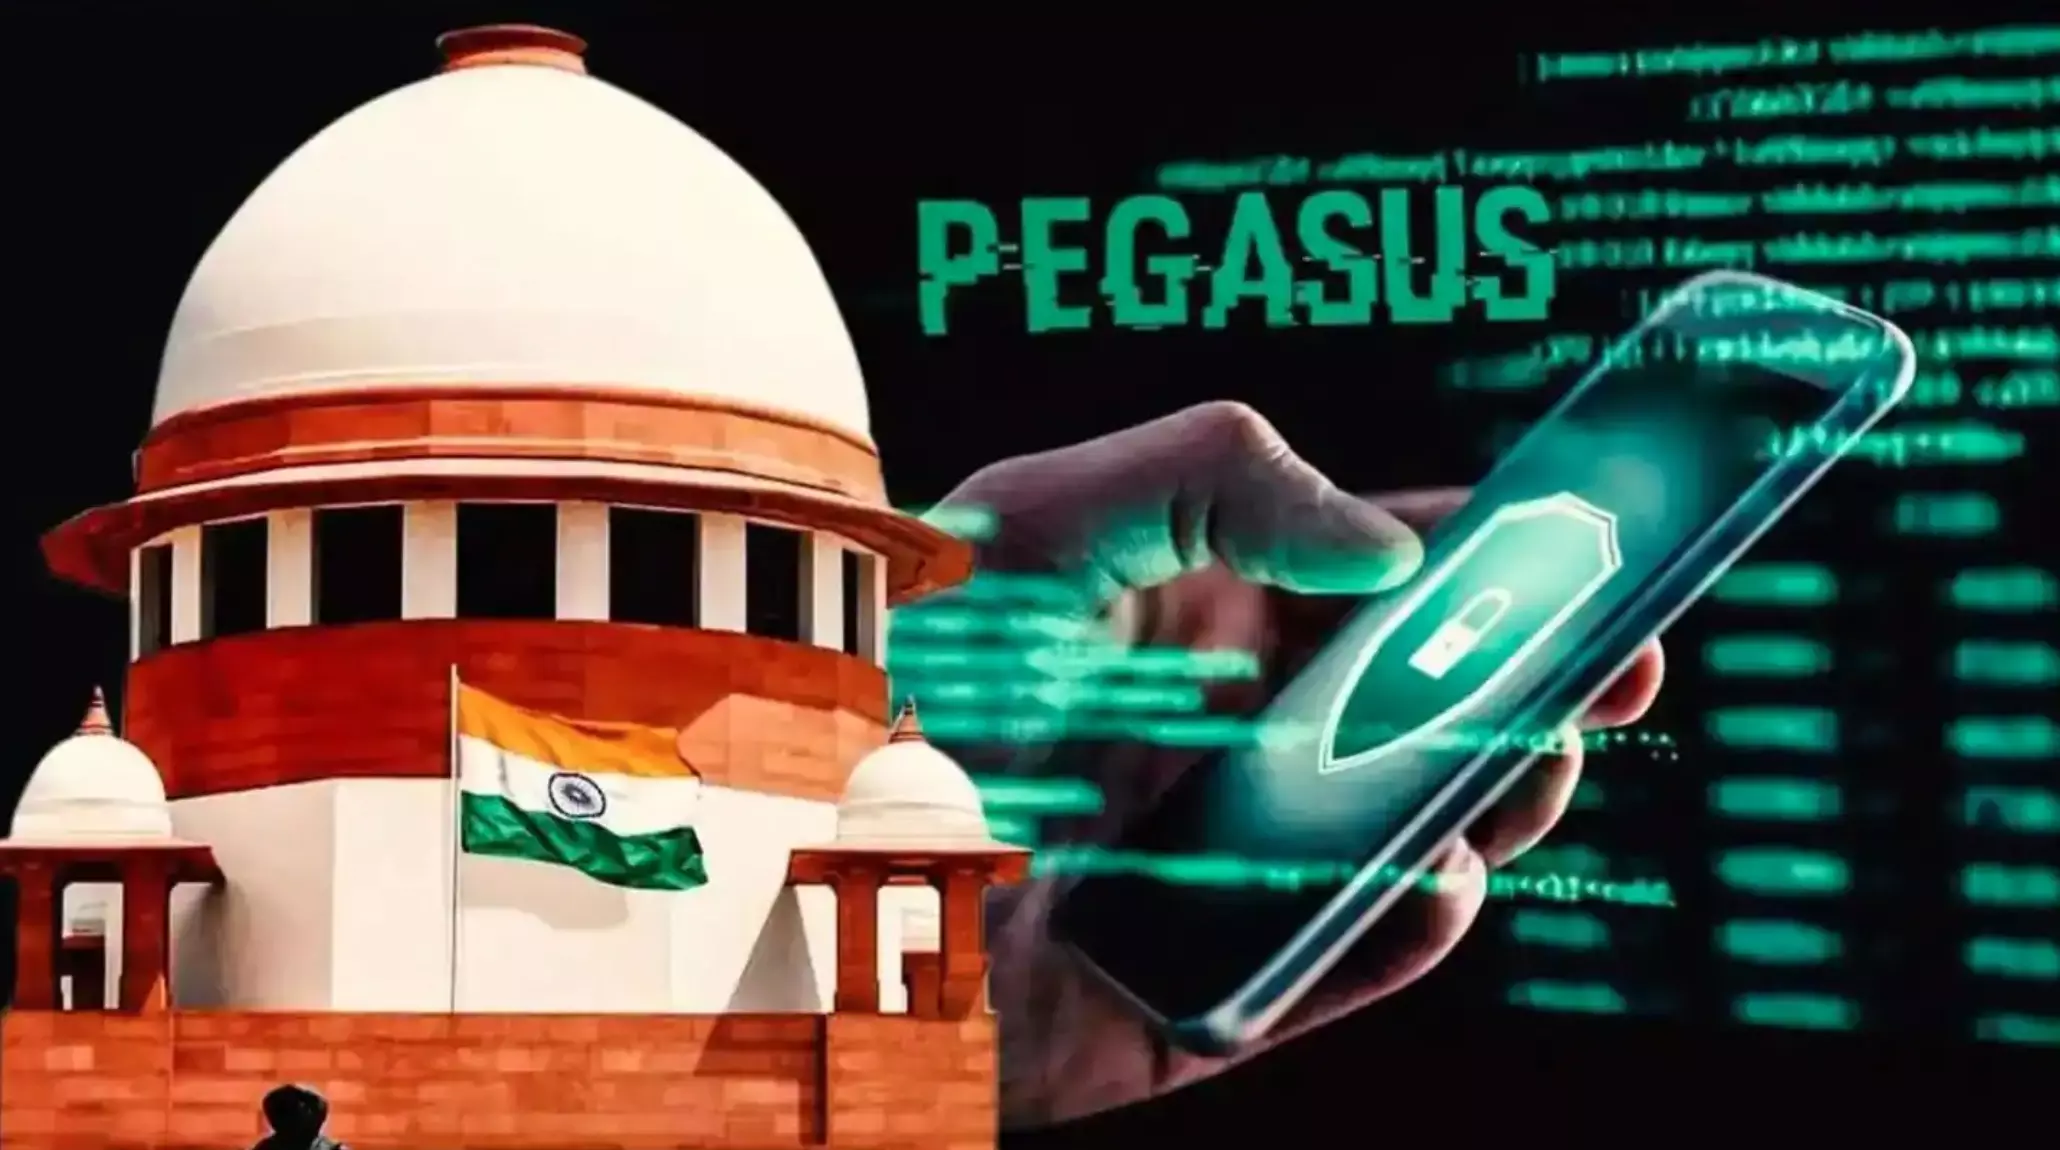 Supreme Court on Pegasus